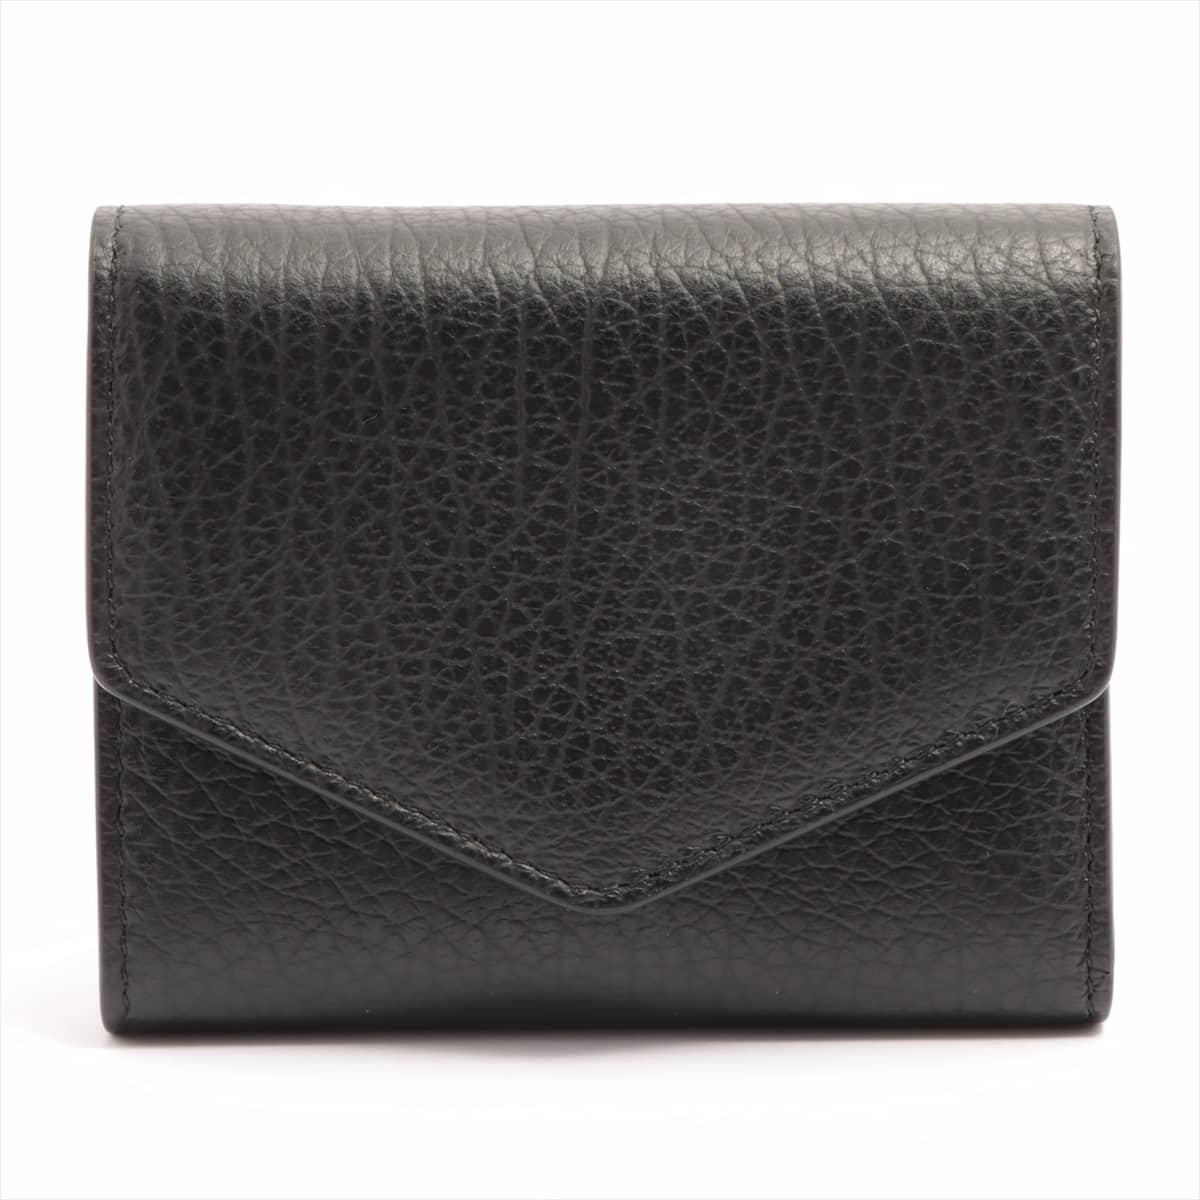 Maison Margiela Leather Wallet Black